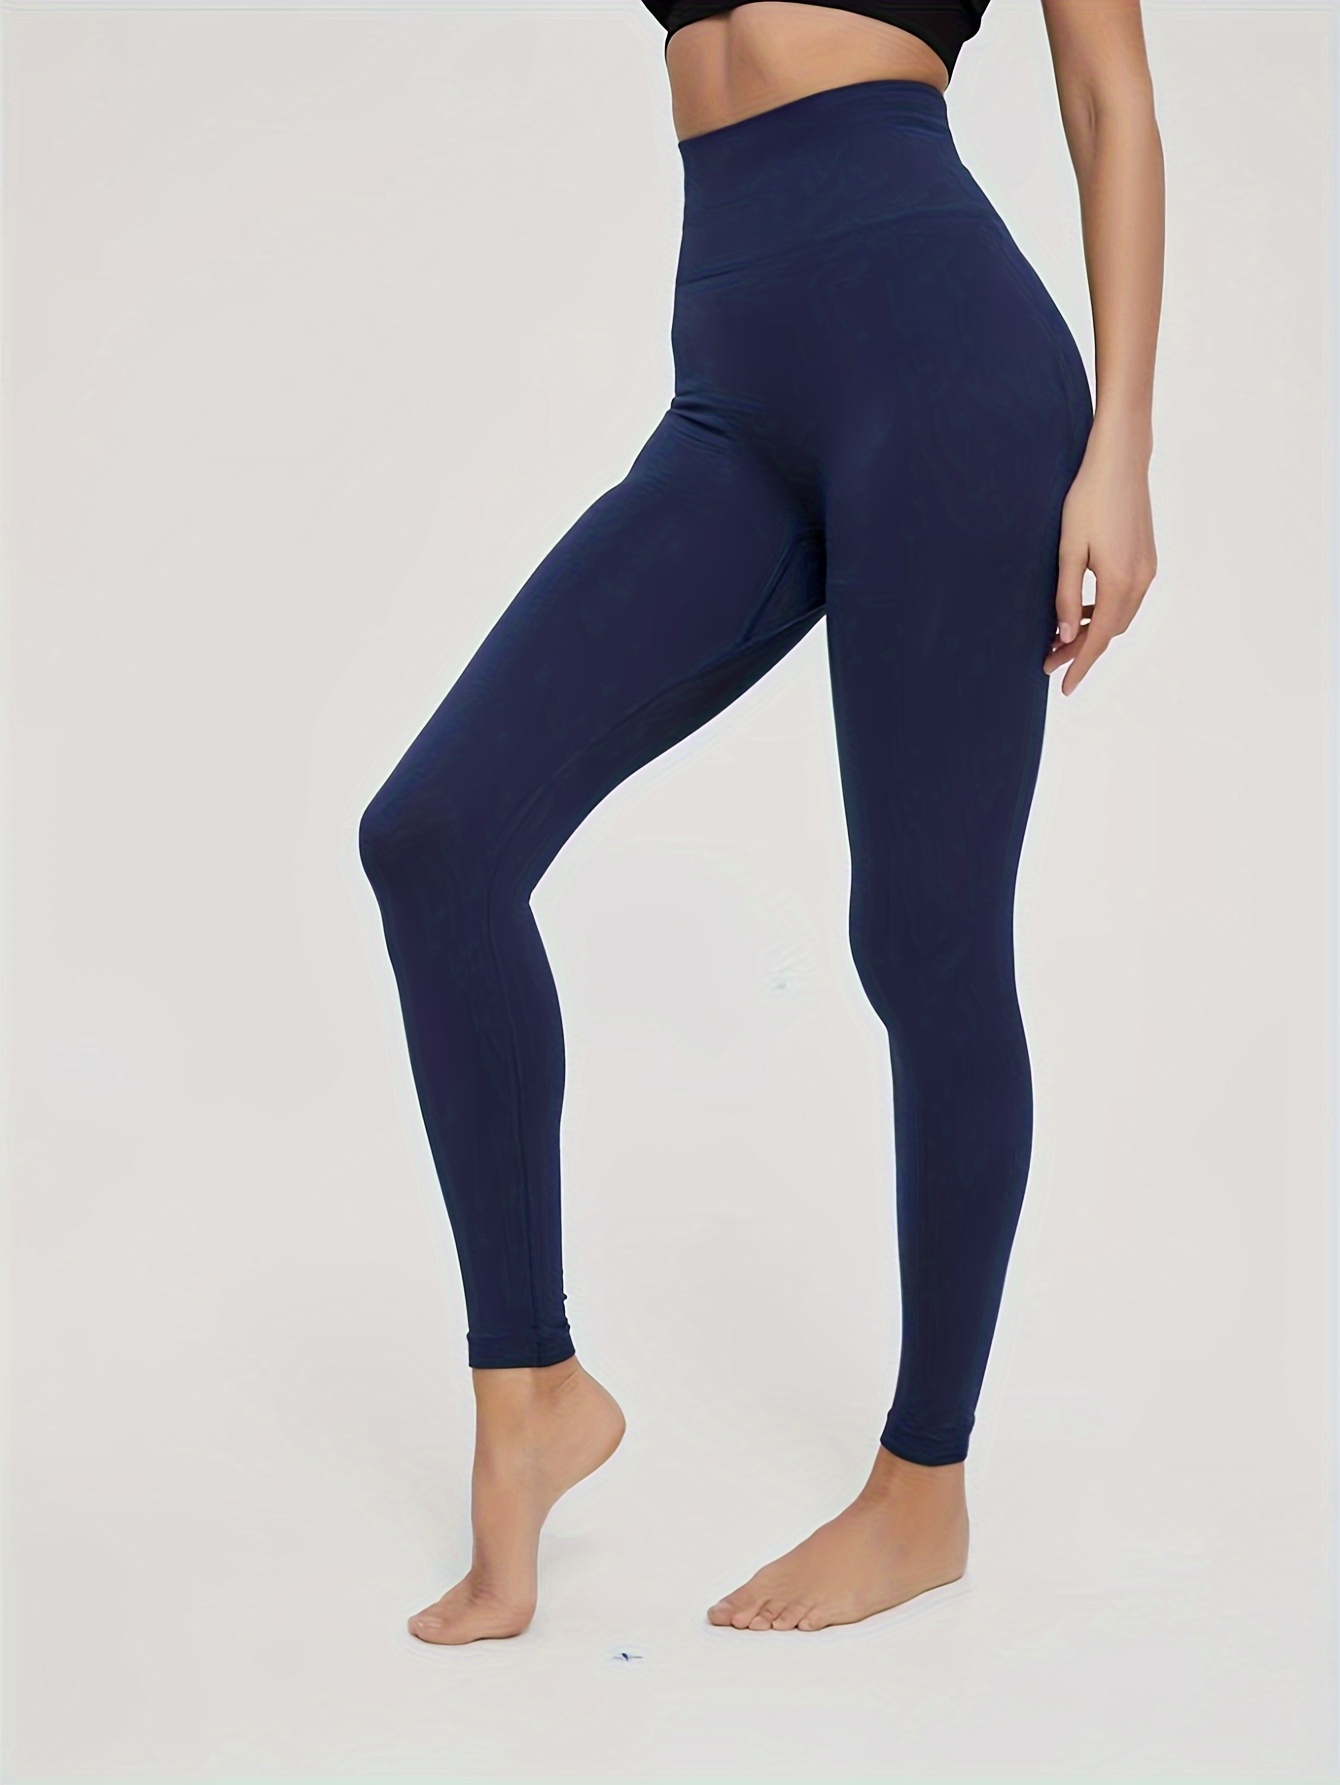  Yuiboo Elephant Blue Printed Yoga Leggings for Women High Waist  Stretchy Butt Lifting Leggings X-Small : Clothing, Shoes & Jewelry